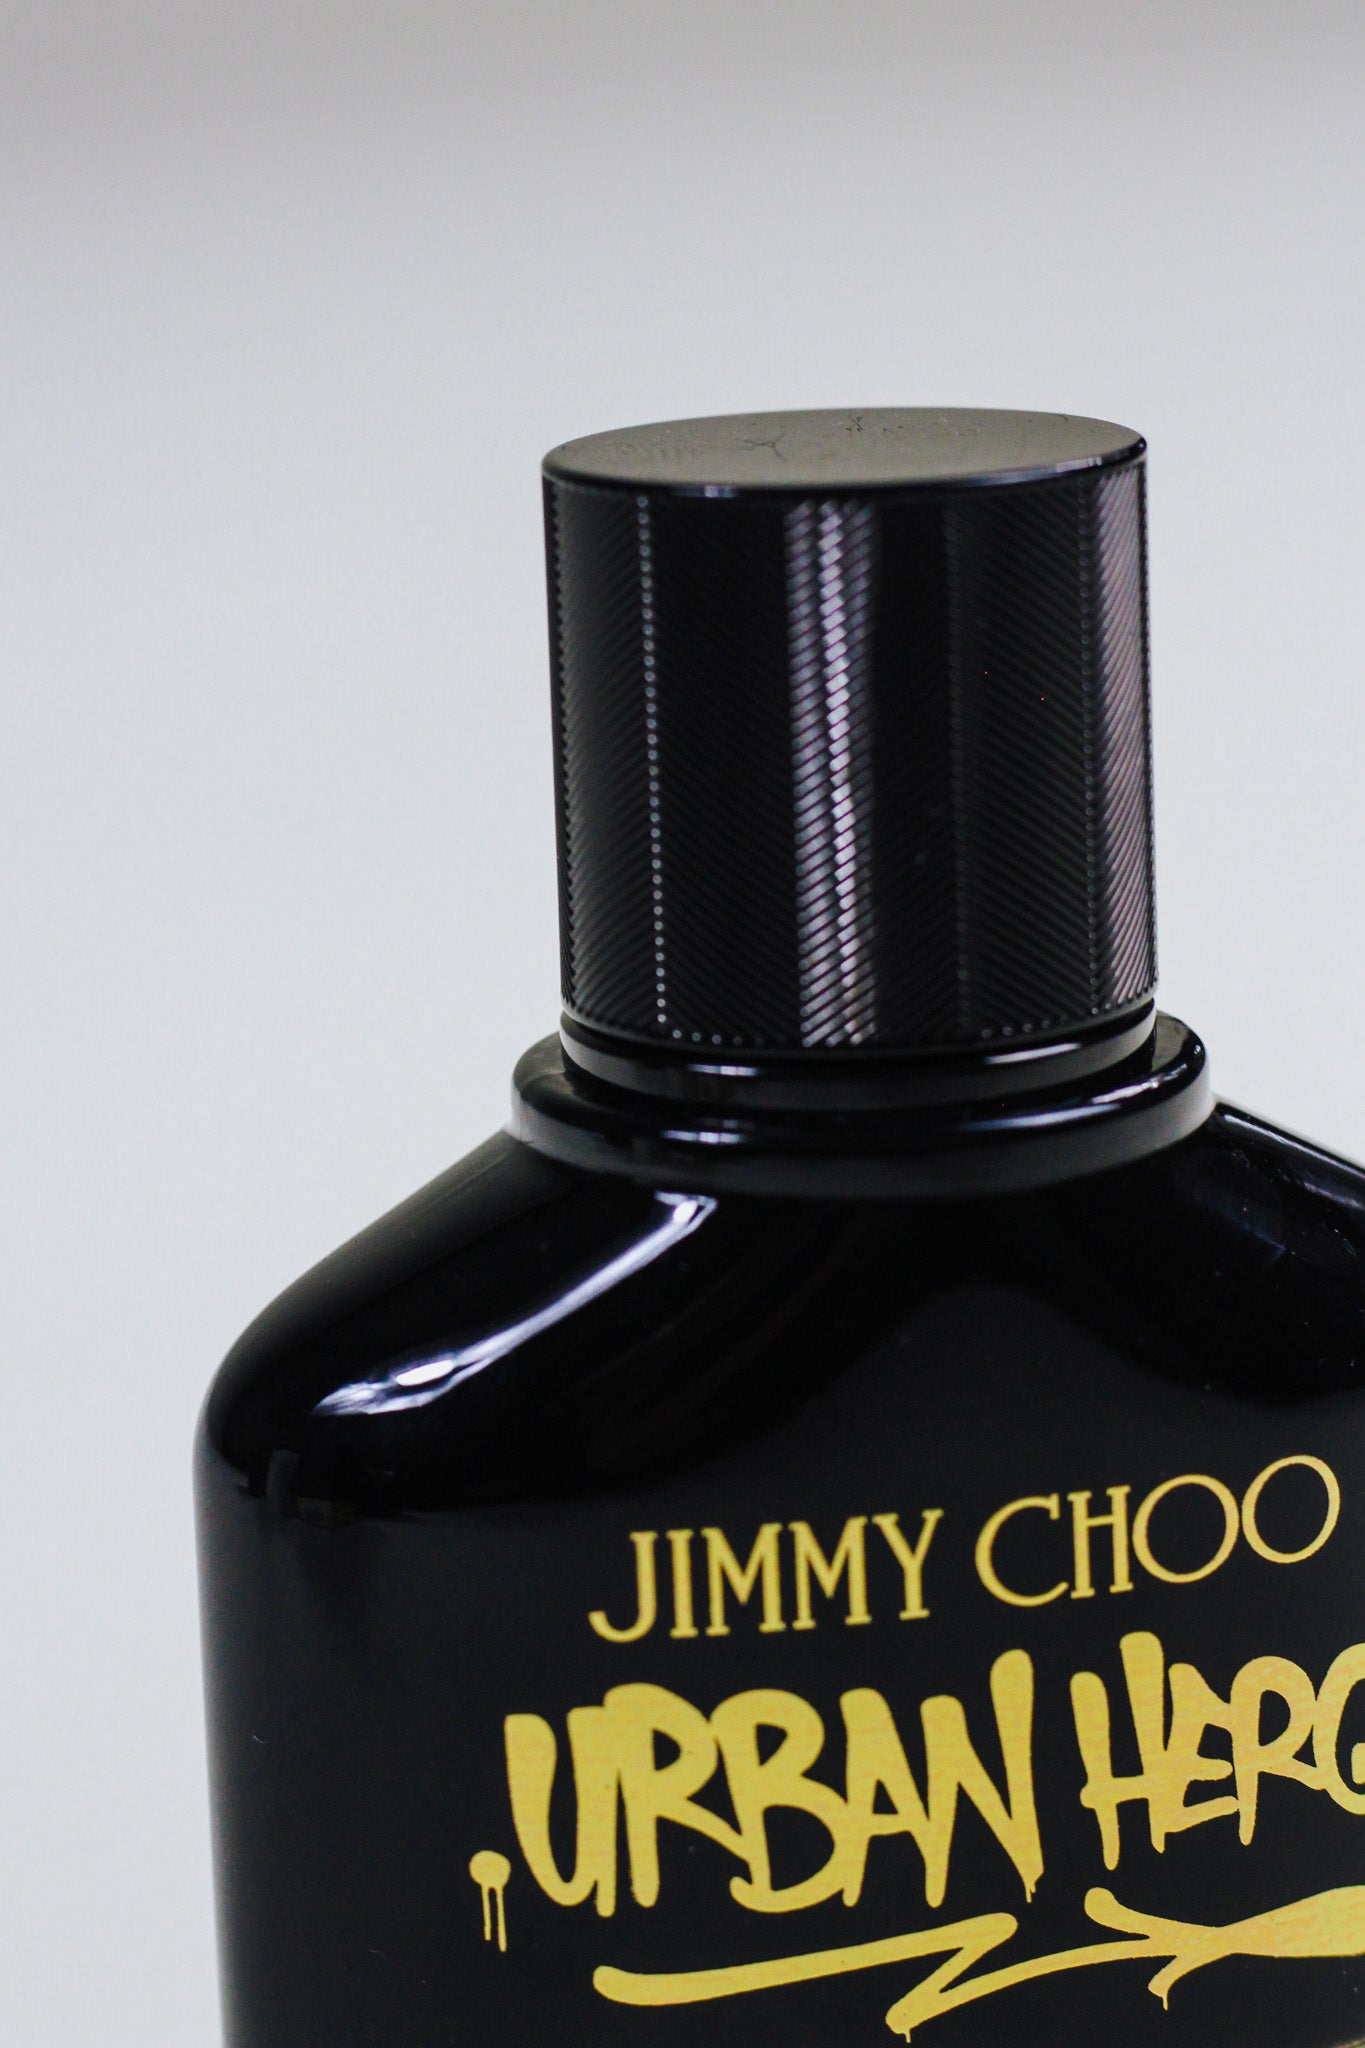 Parfum – Inc Choo Urban Jimmy De Spray Dales Clothing Eau Hero